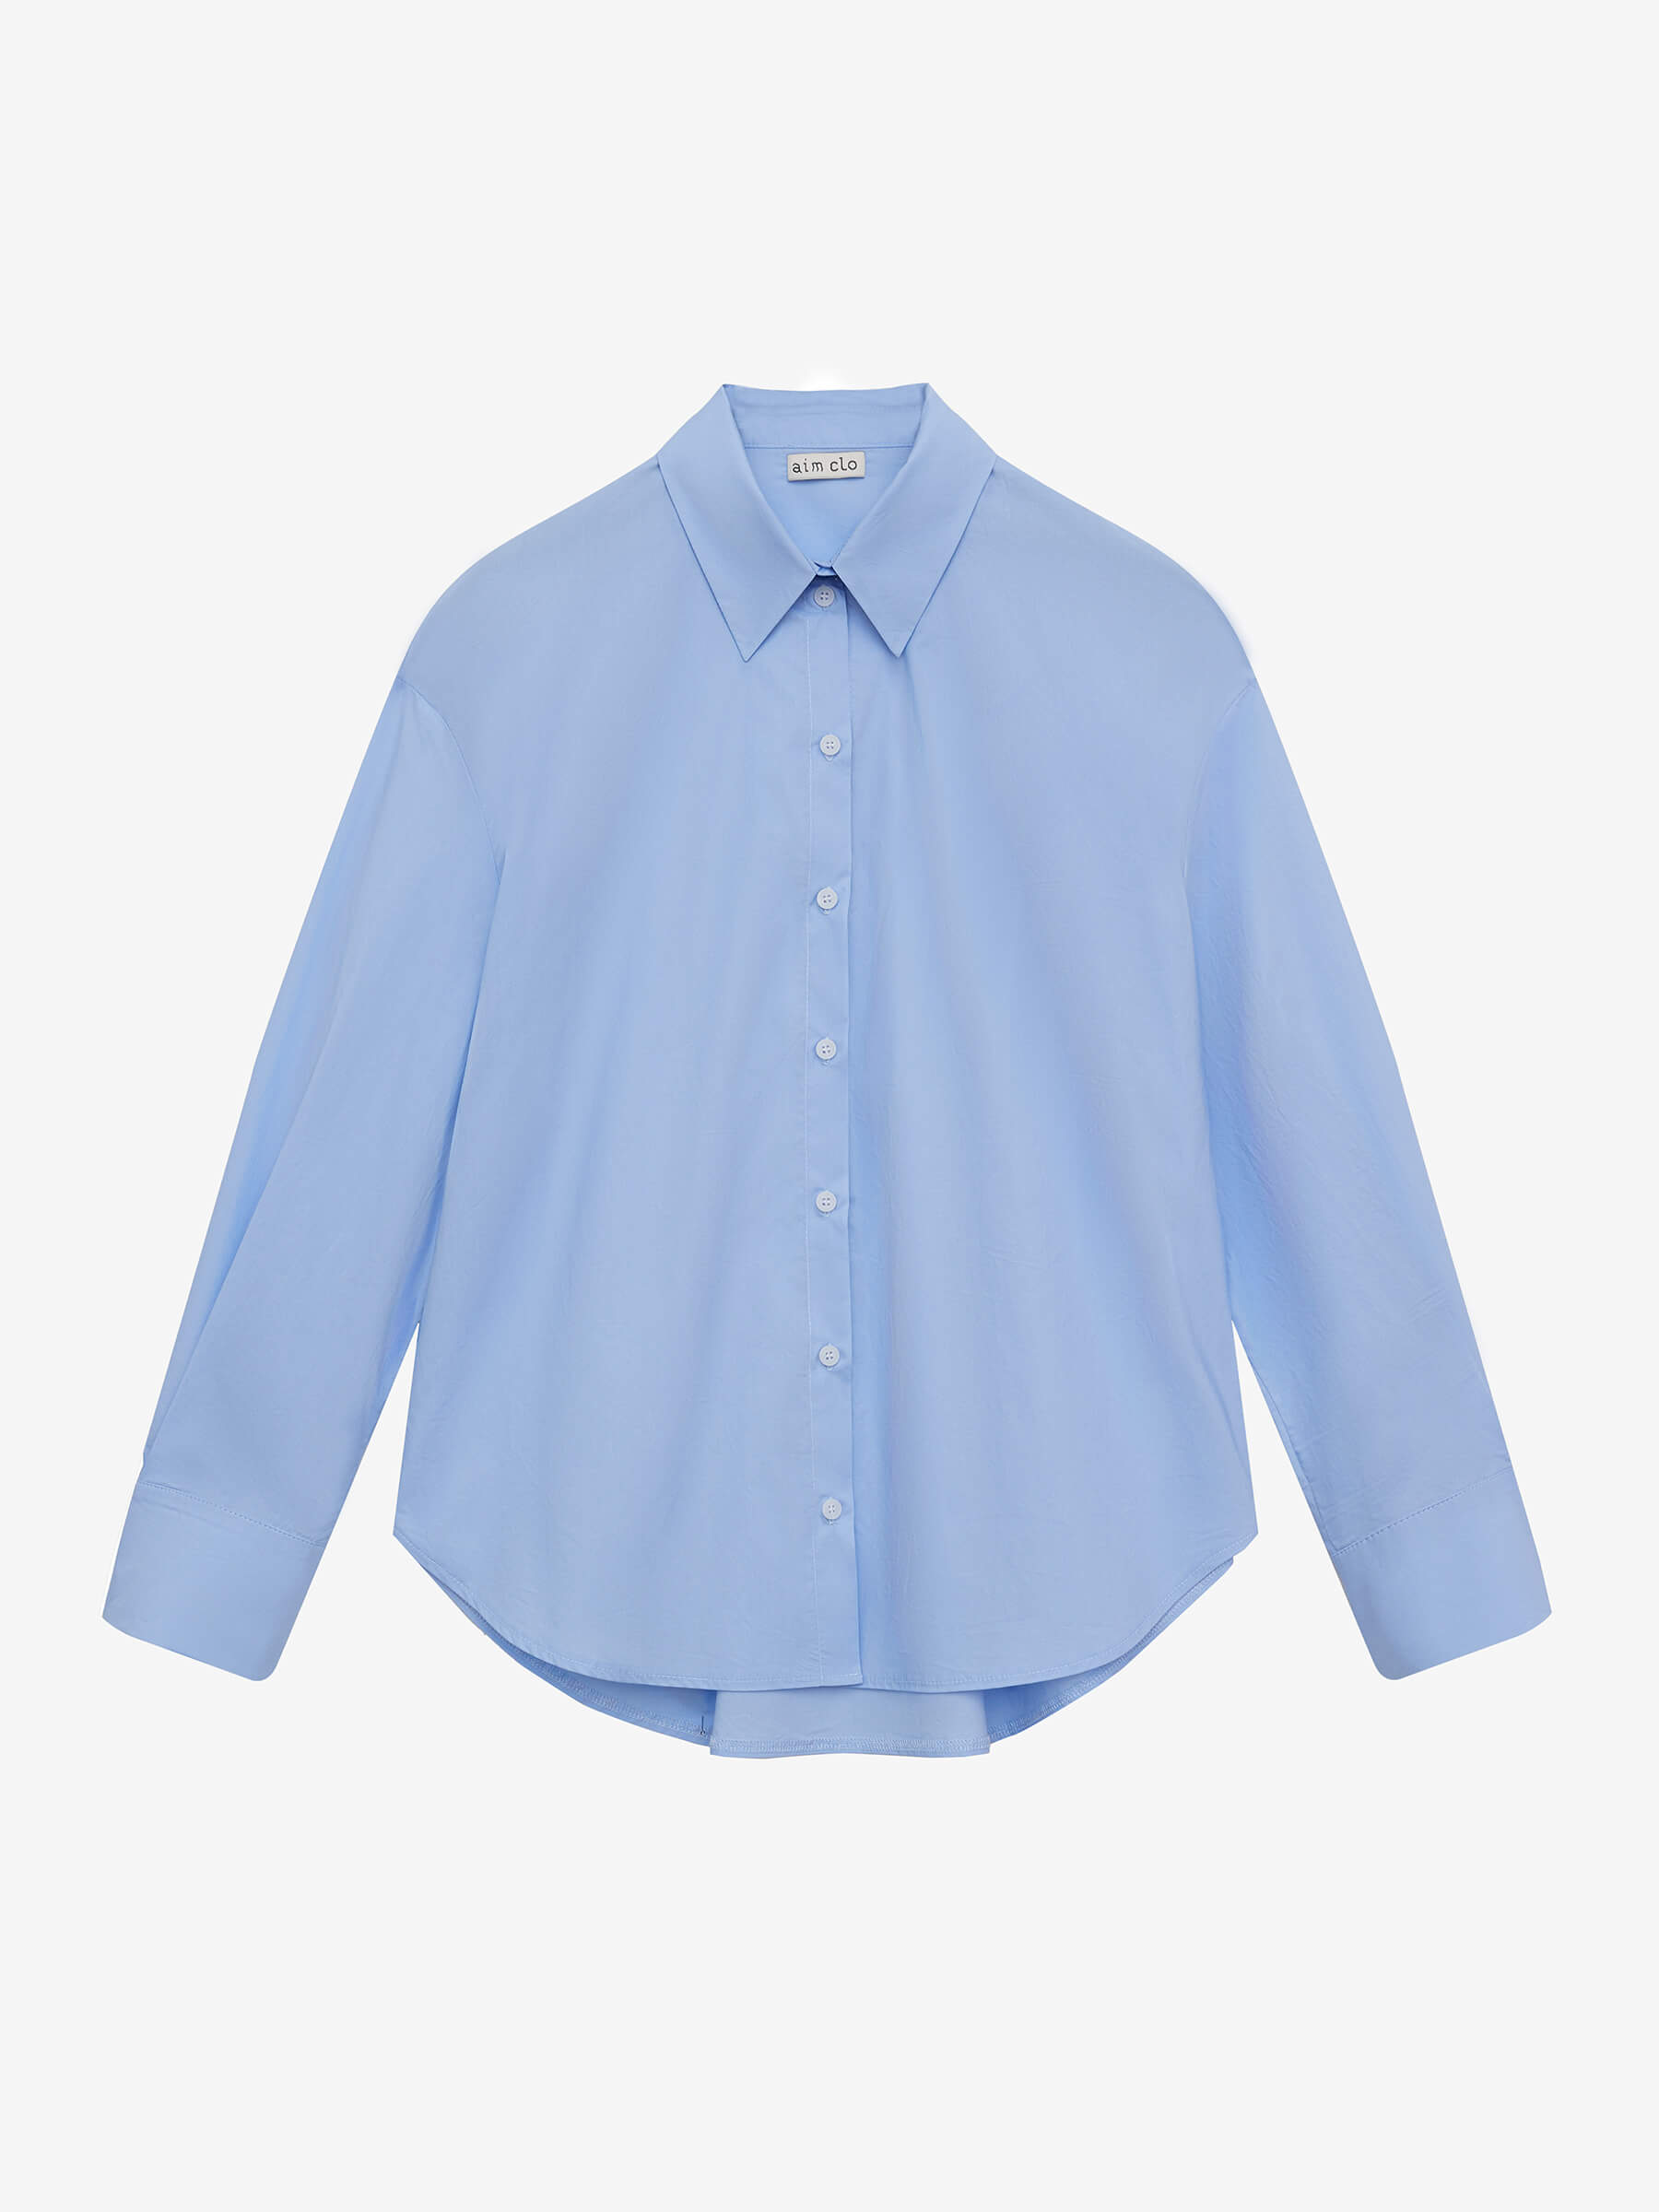 Рубашка свободного кроя с защипами XS/S, светло-голубой